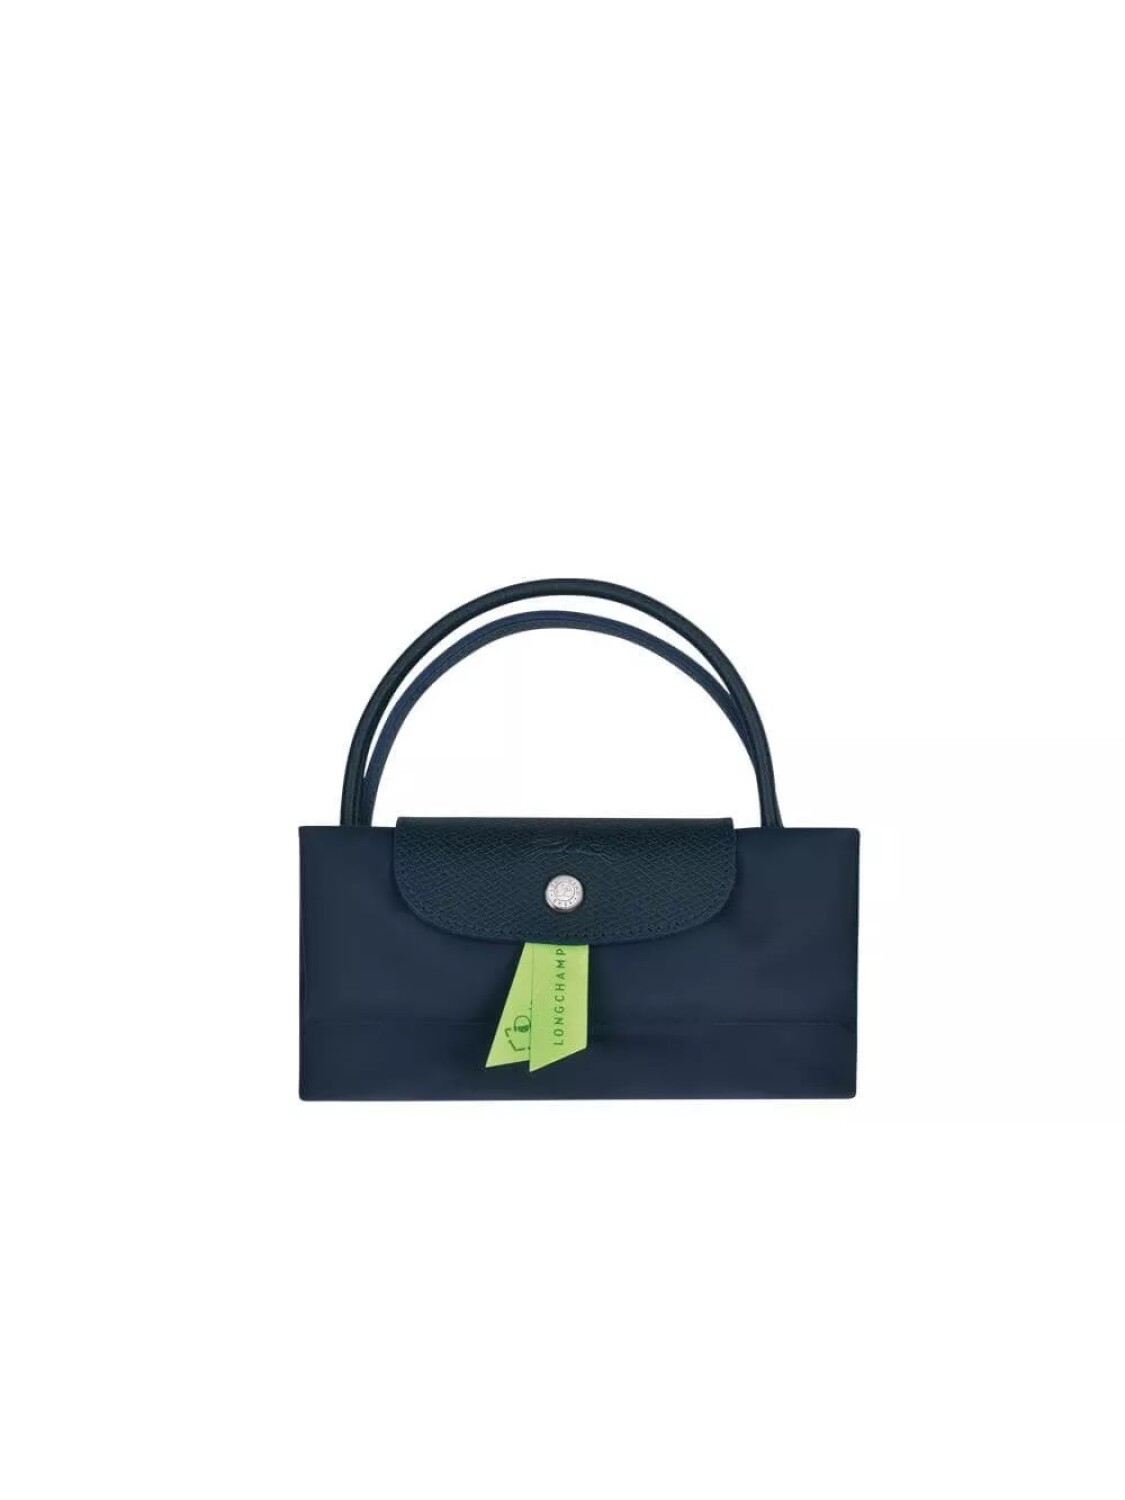 Longchamp -Cartera Longchamp plegable de nylon con cierre y asa corta, Le pliage green S Azul